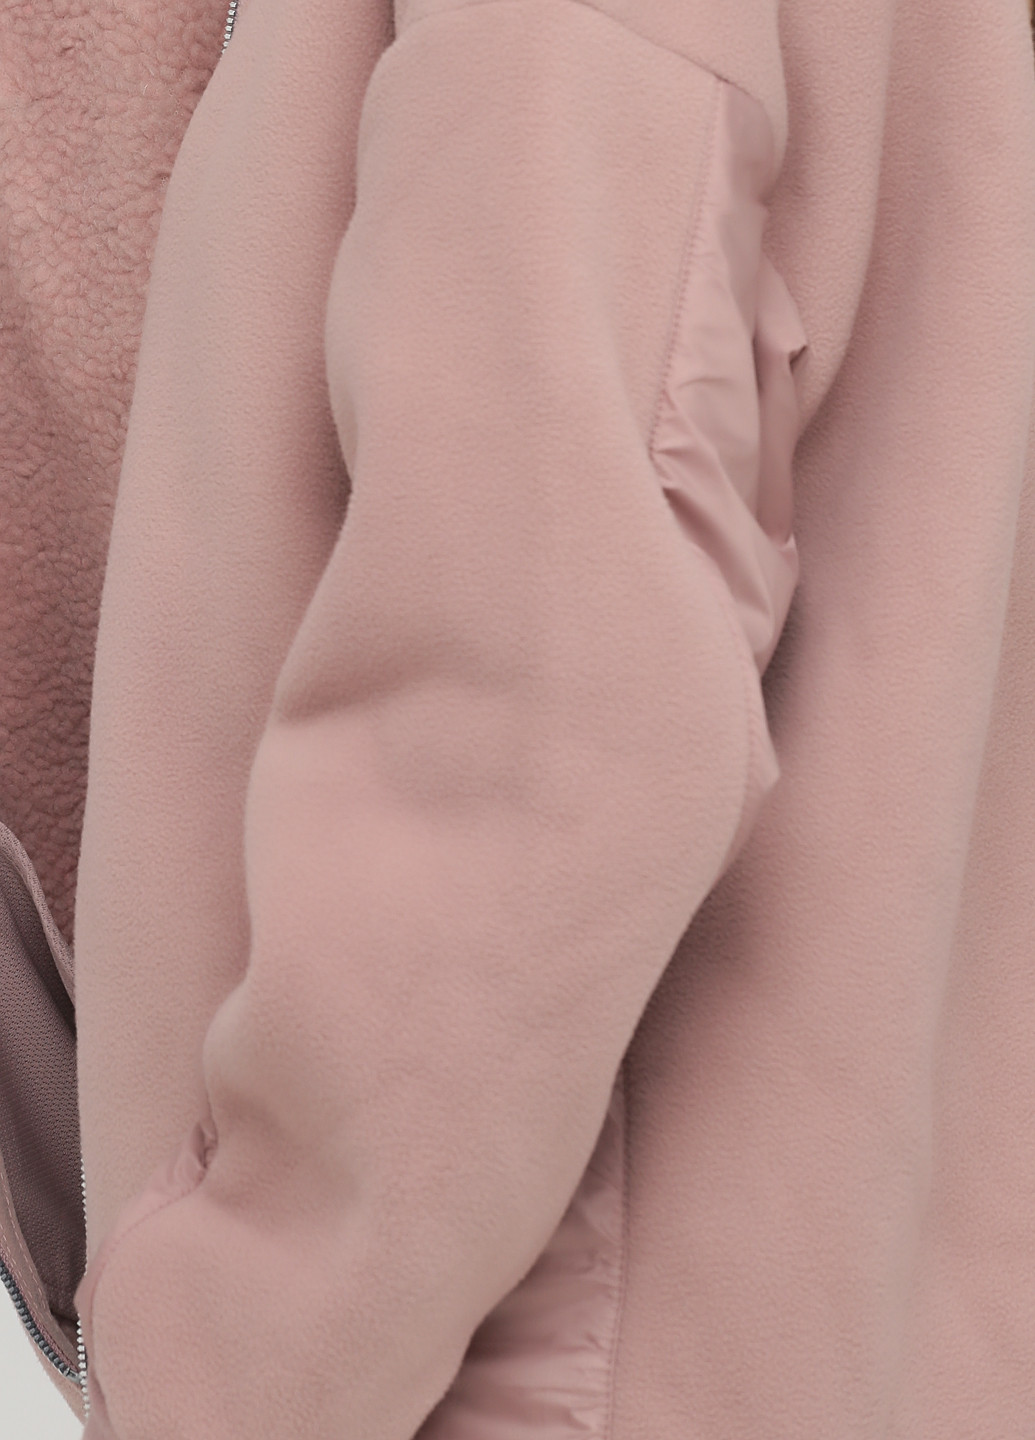 Темно-розовая демисезонная куртка H&M